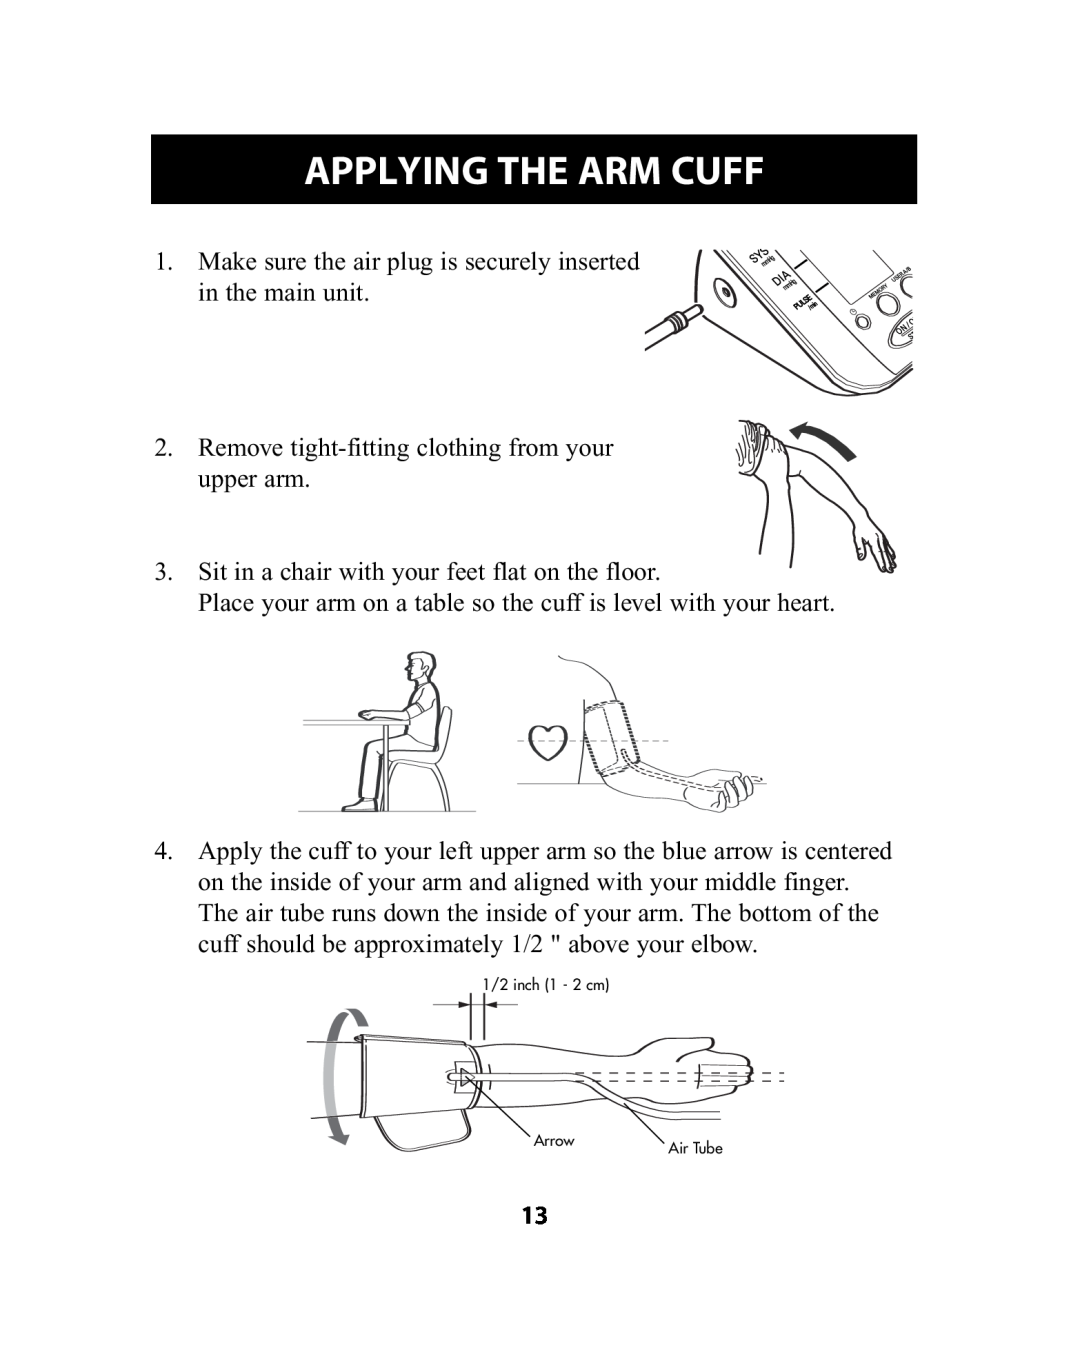 Omron Healthcare HEM-741CREL manual Applying The Arm Cuff 